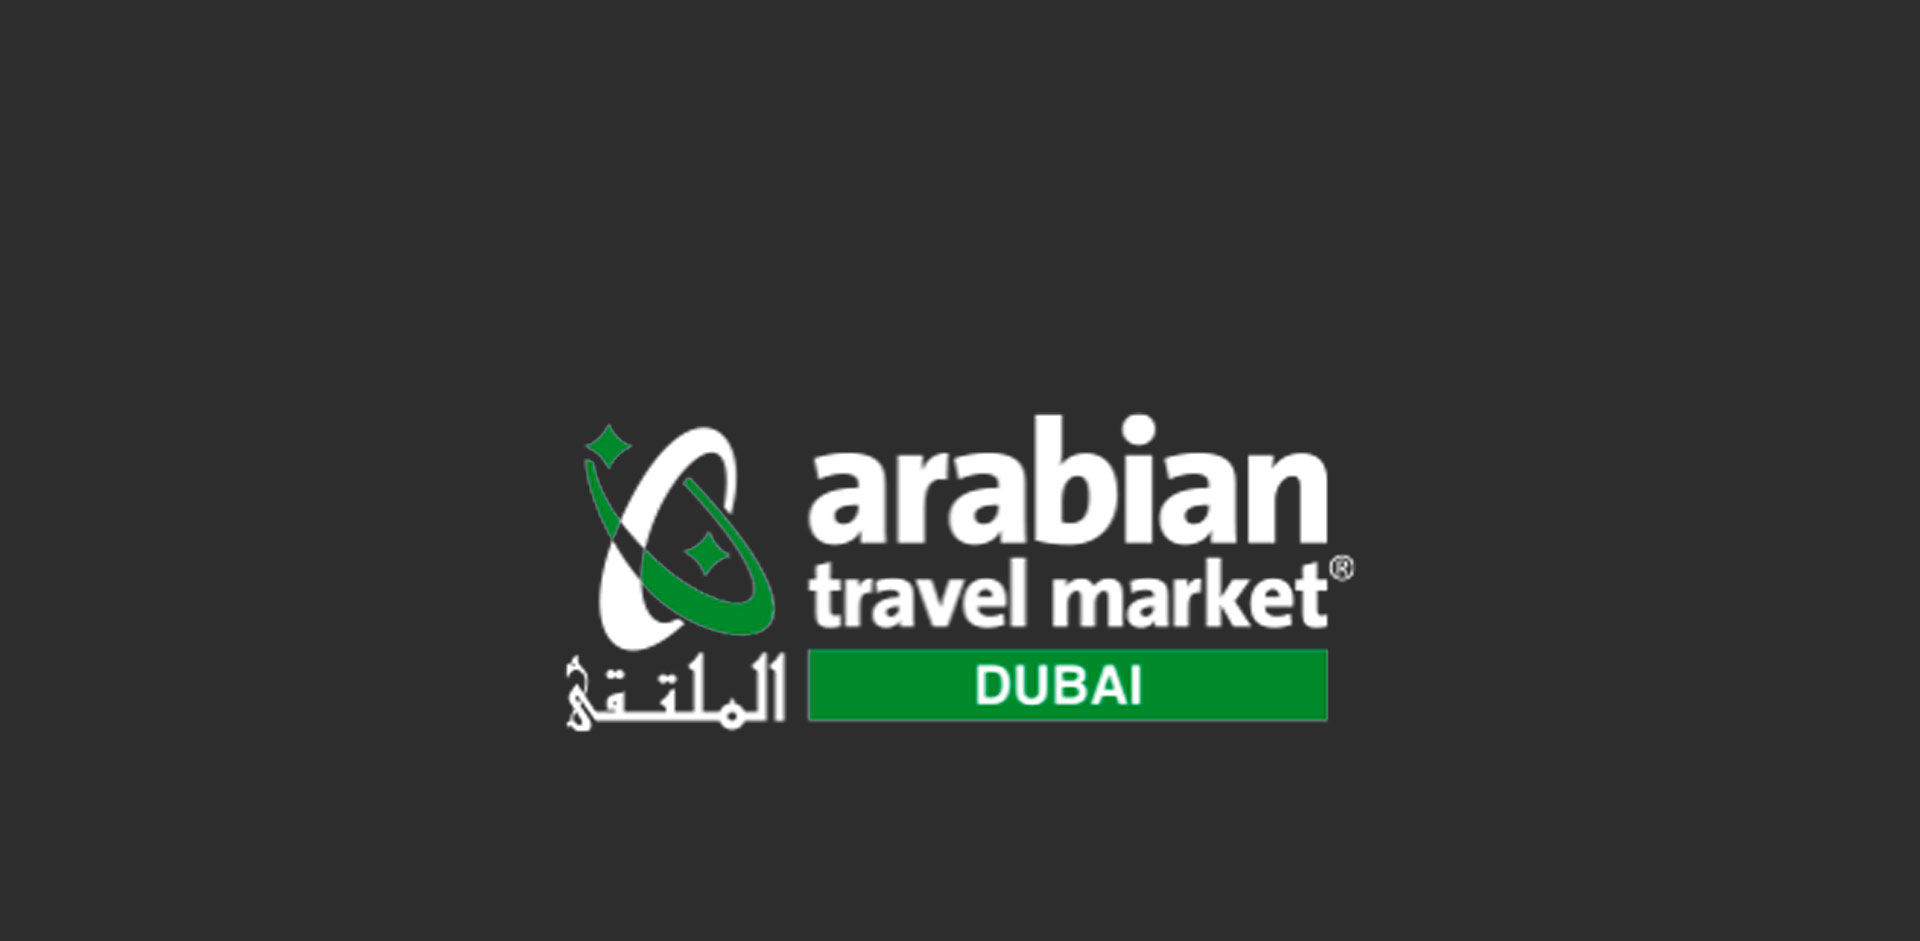 arabian travel market badge